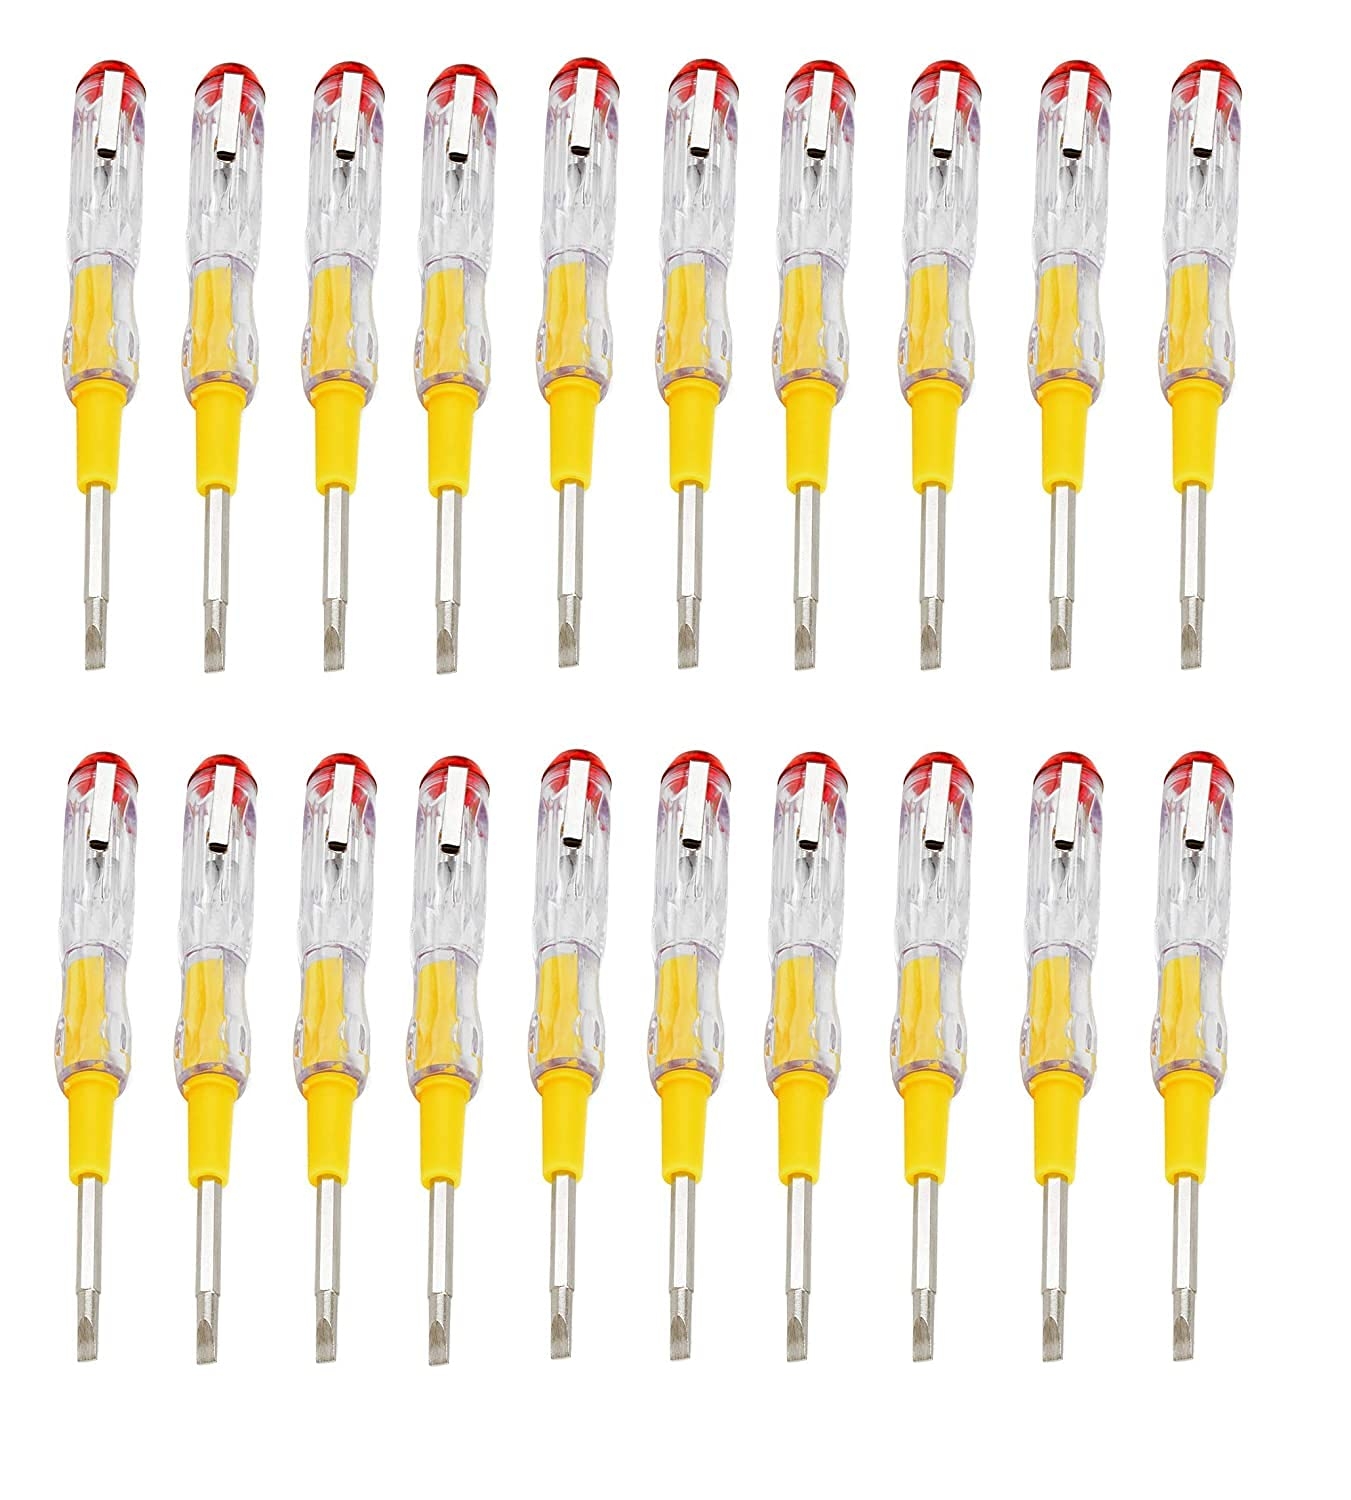 2 in 1 666 Voltage Line Tester 100V-500V AC 20 pcs, Multicolour